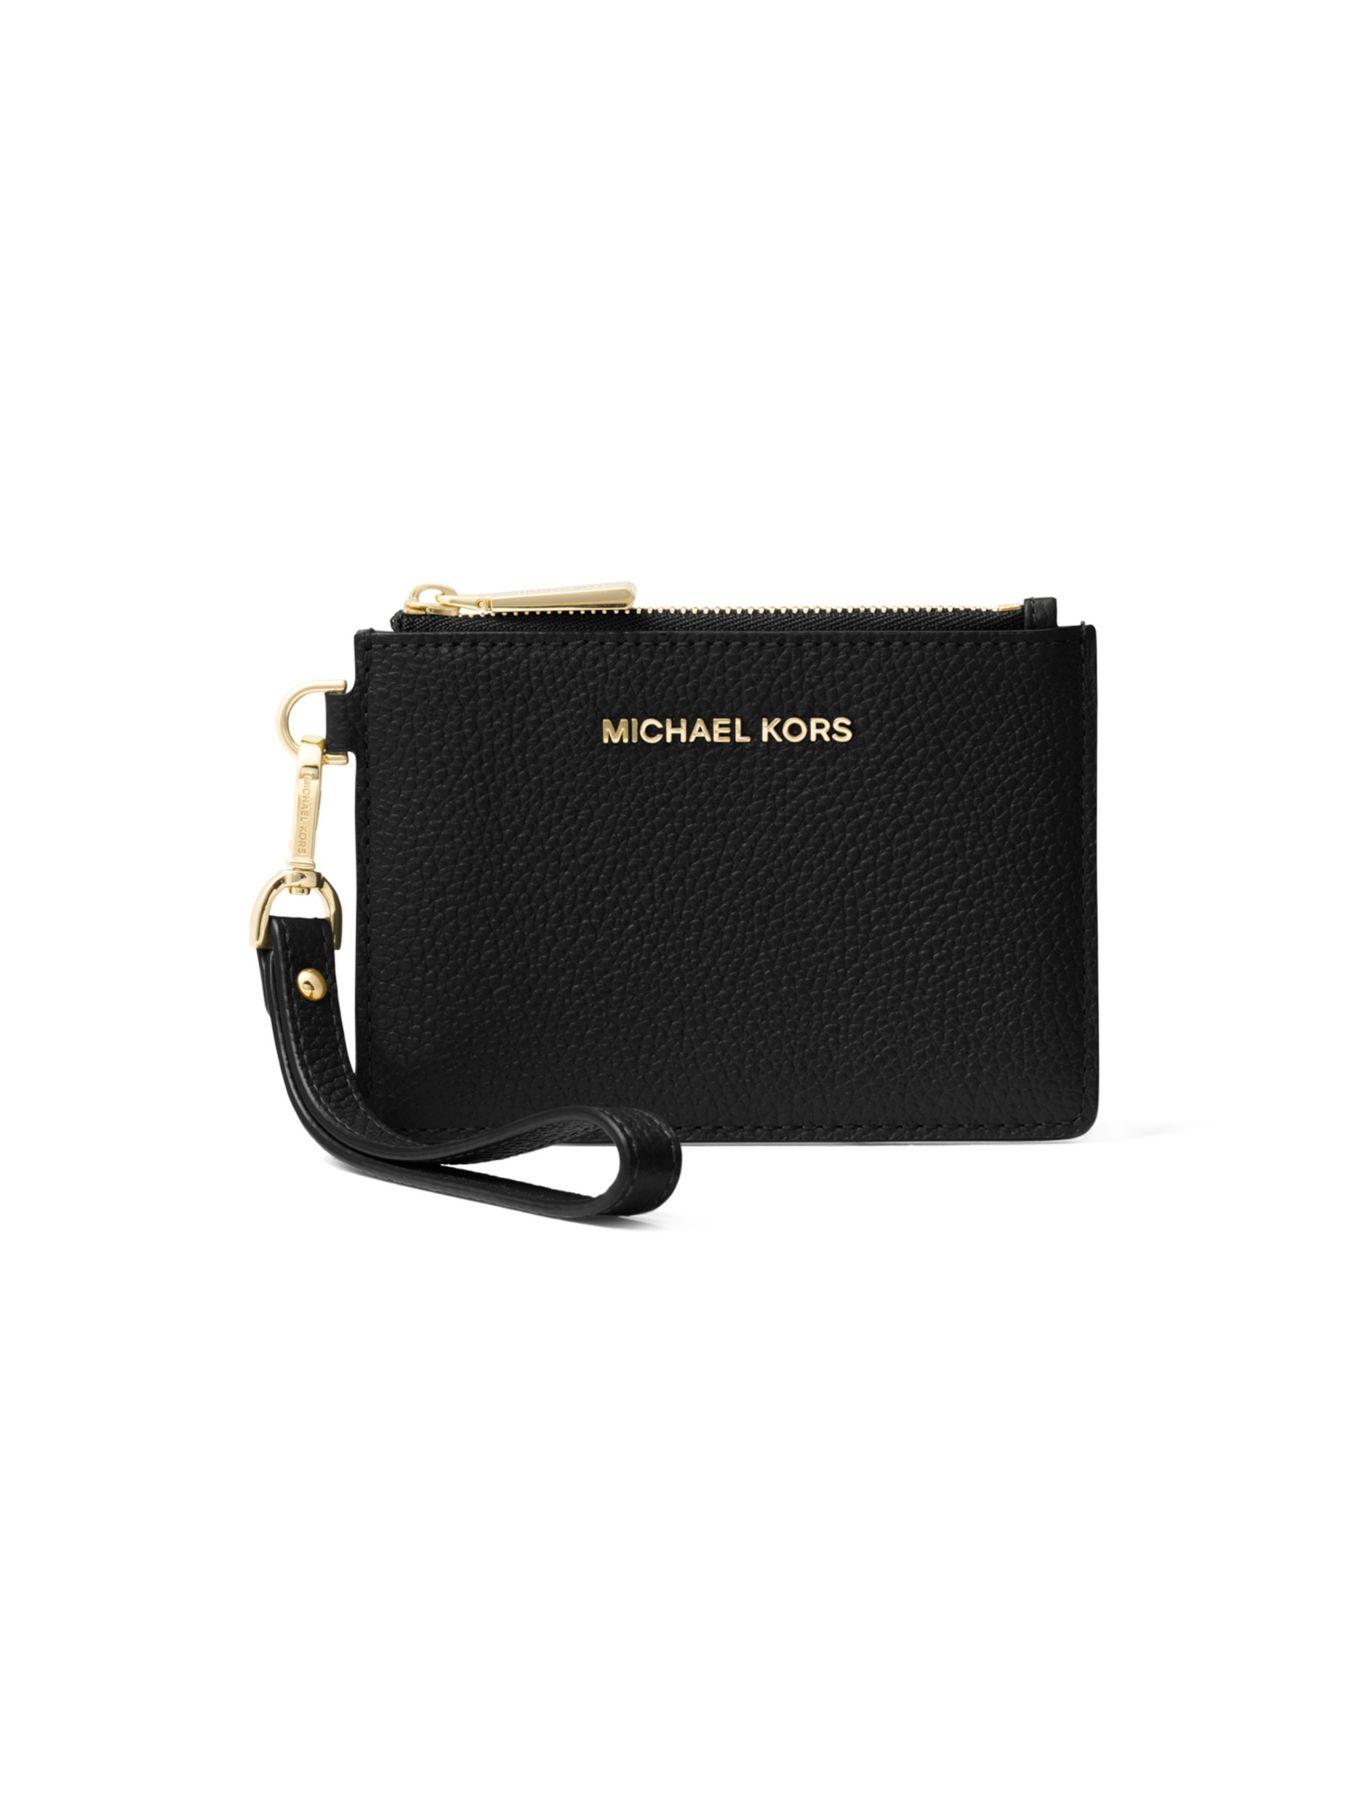 black small michael kors purse